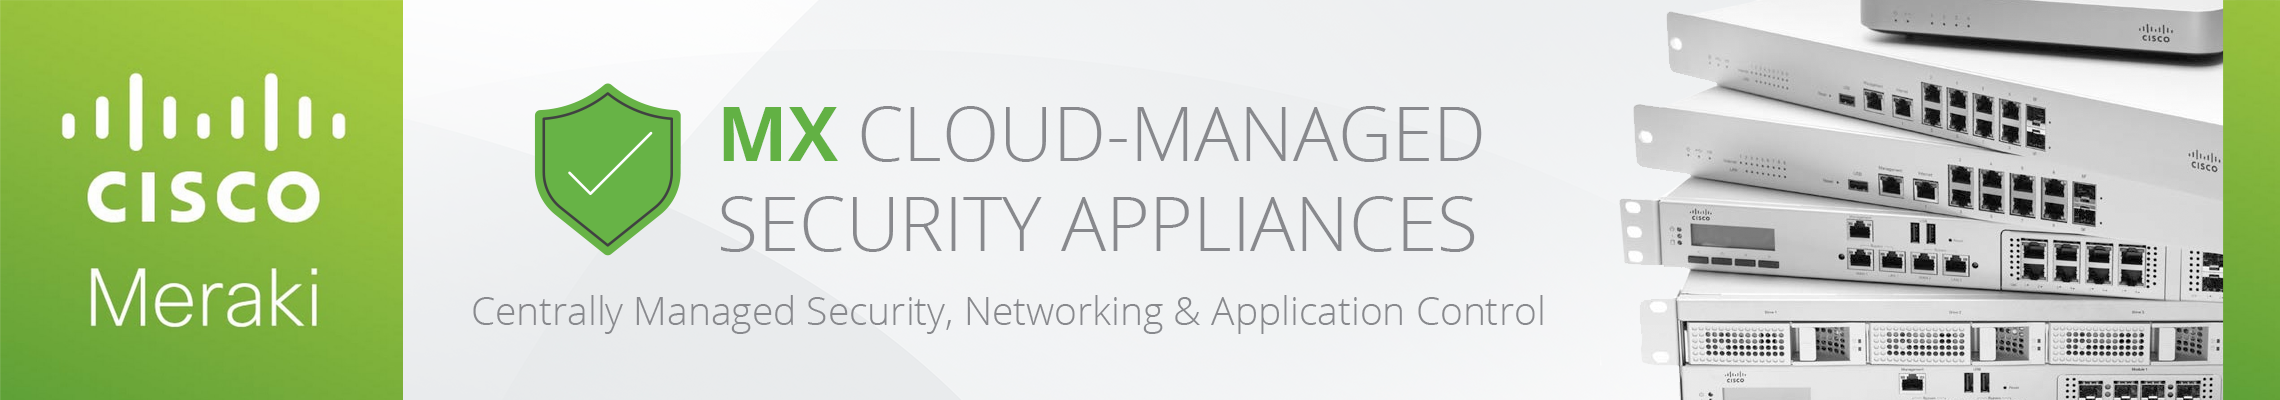 Cisco Meraki MX Cloud-Managed Security Appliances